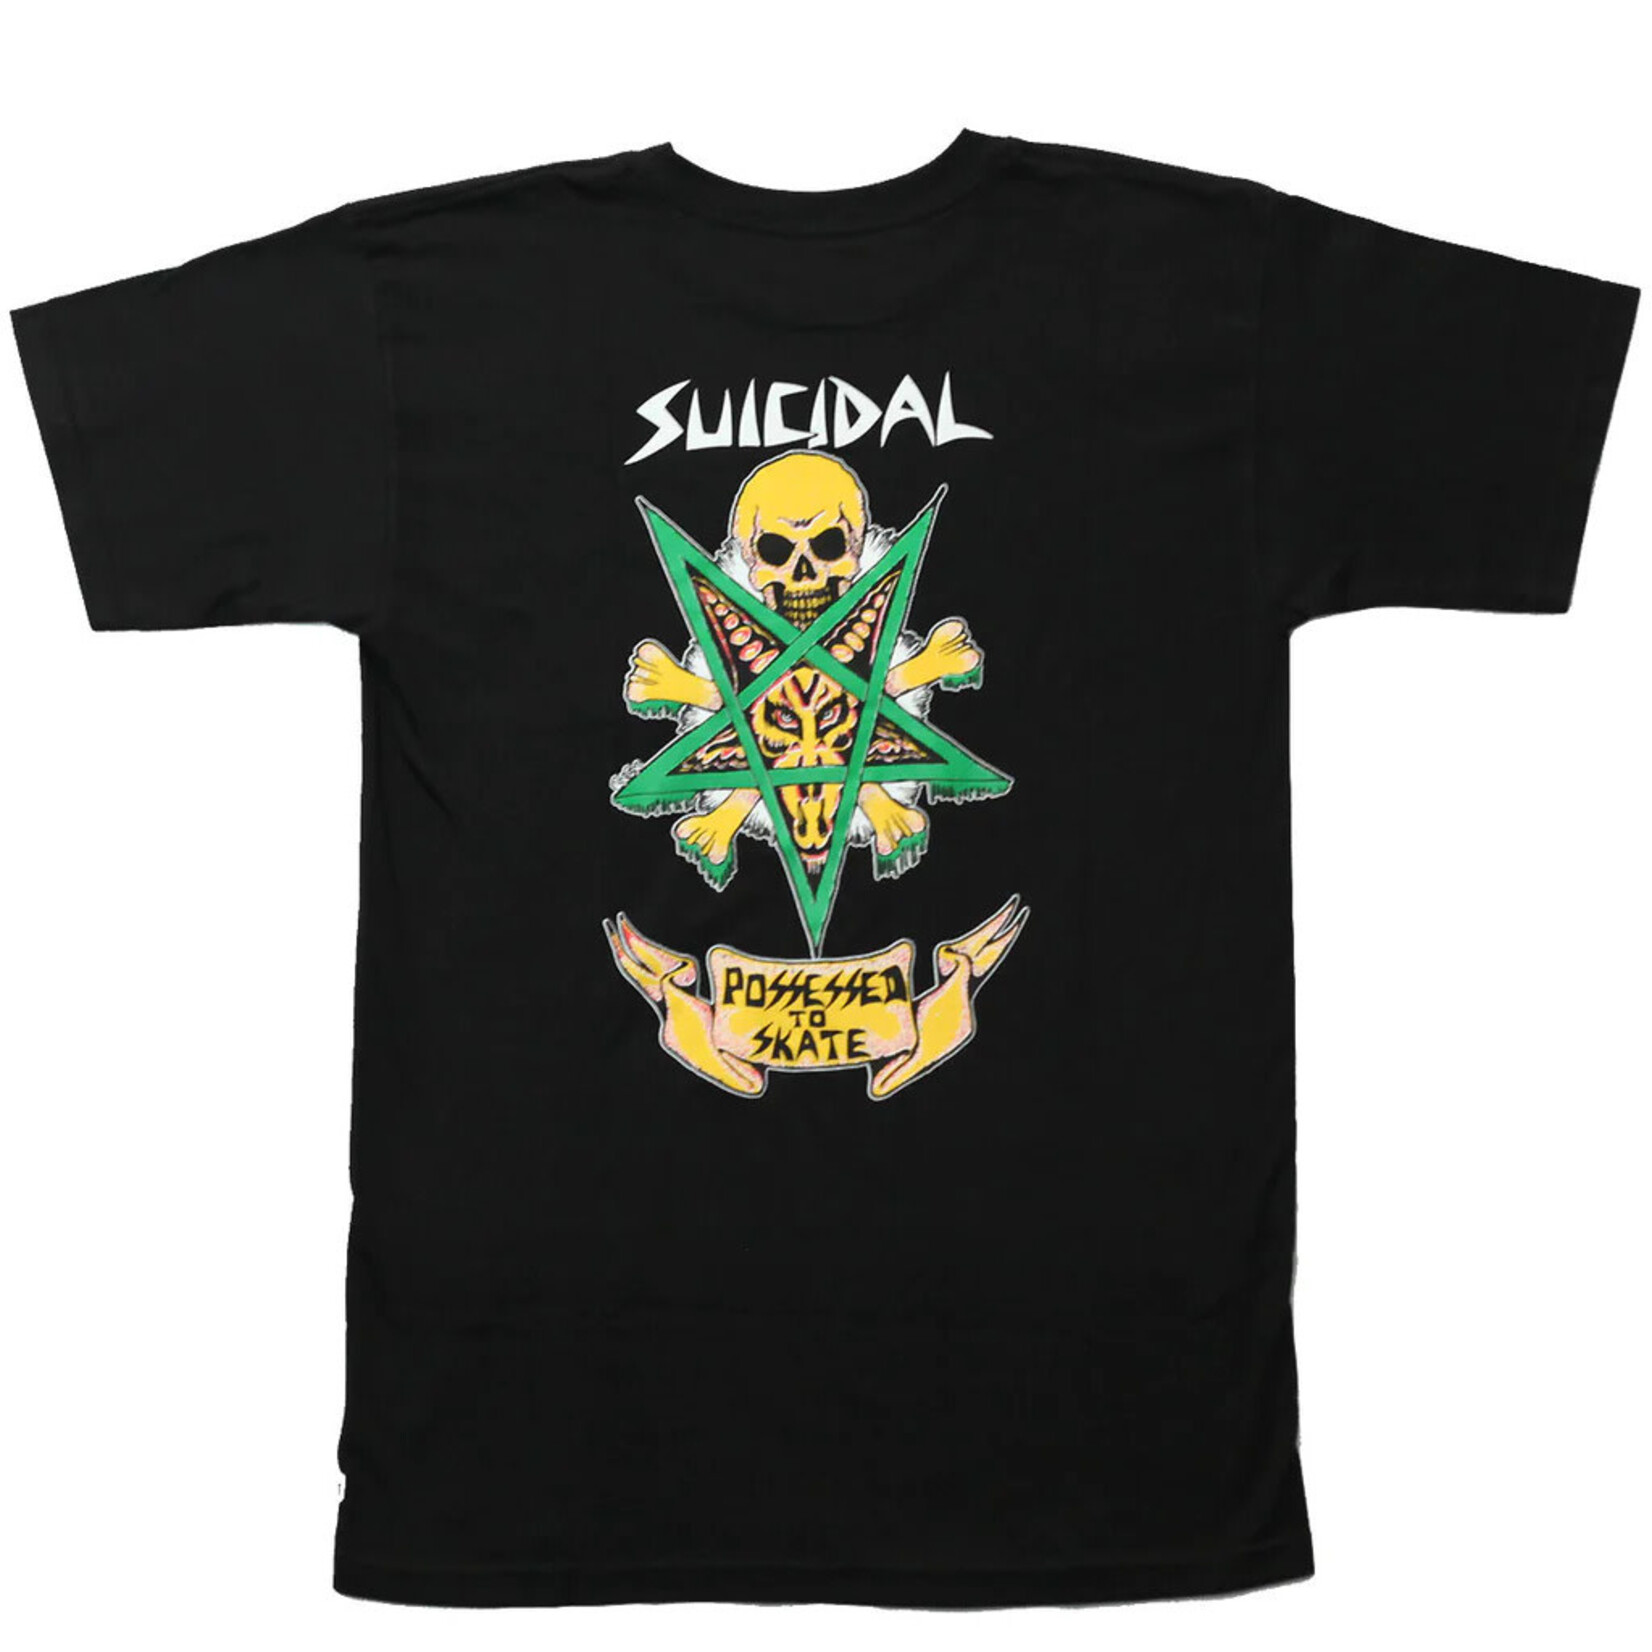 Dogtown Suicidal Skates Possessed To Skate 80s T-Shirt - Black